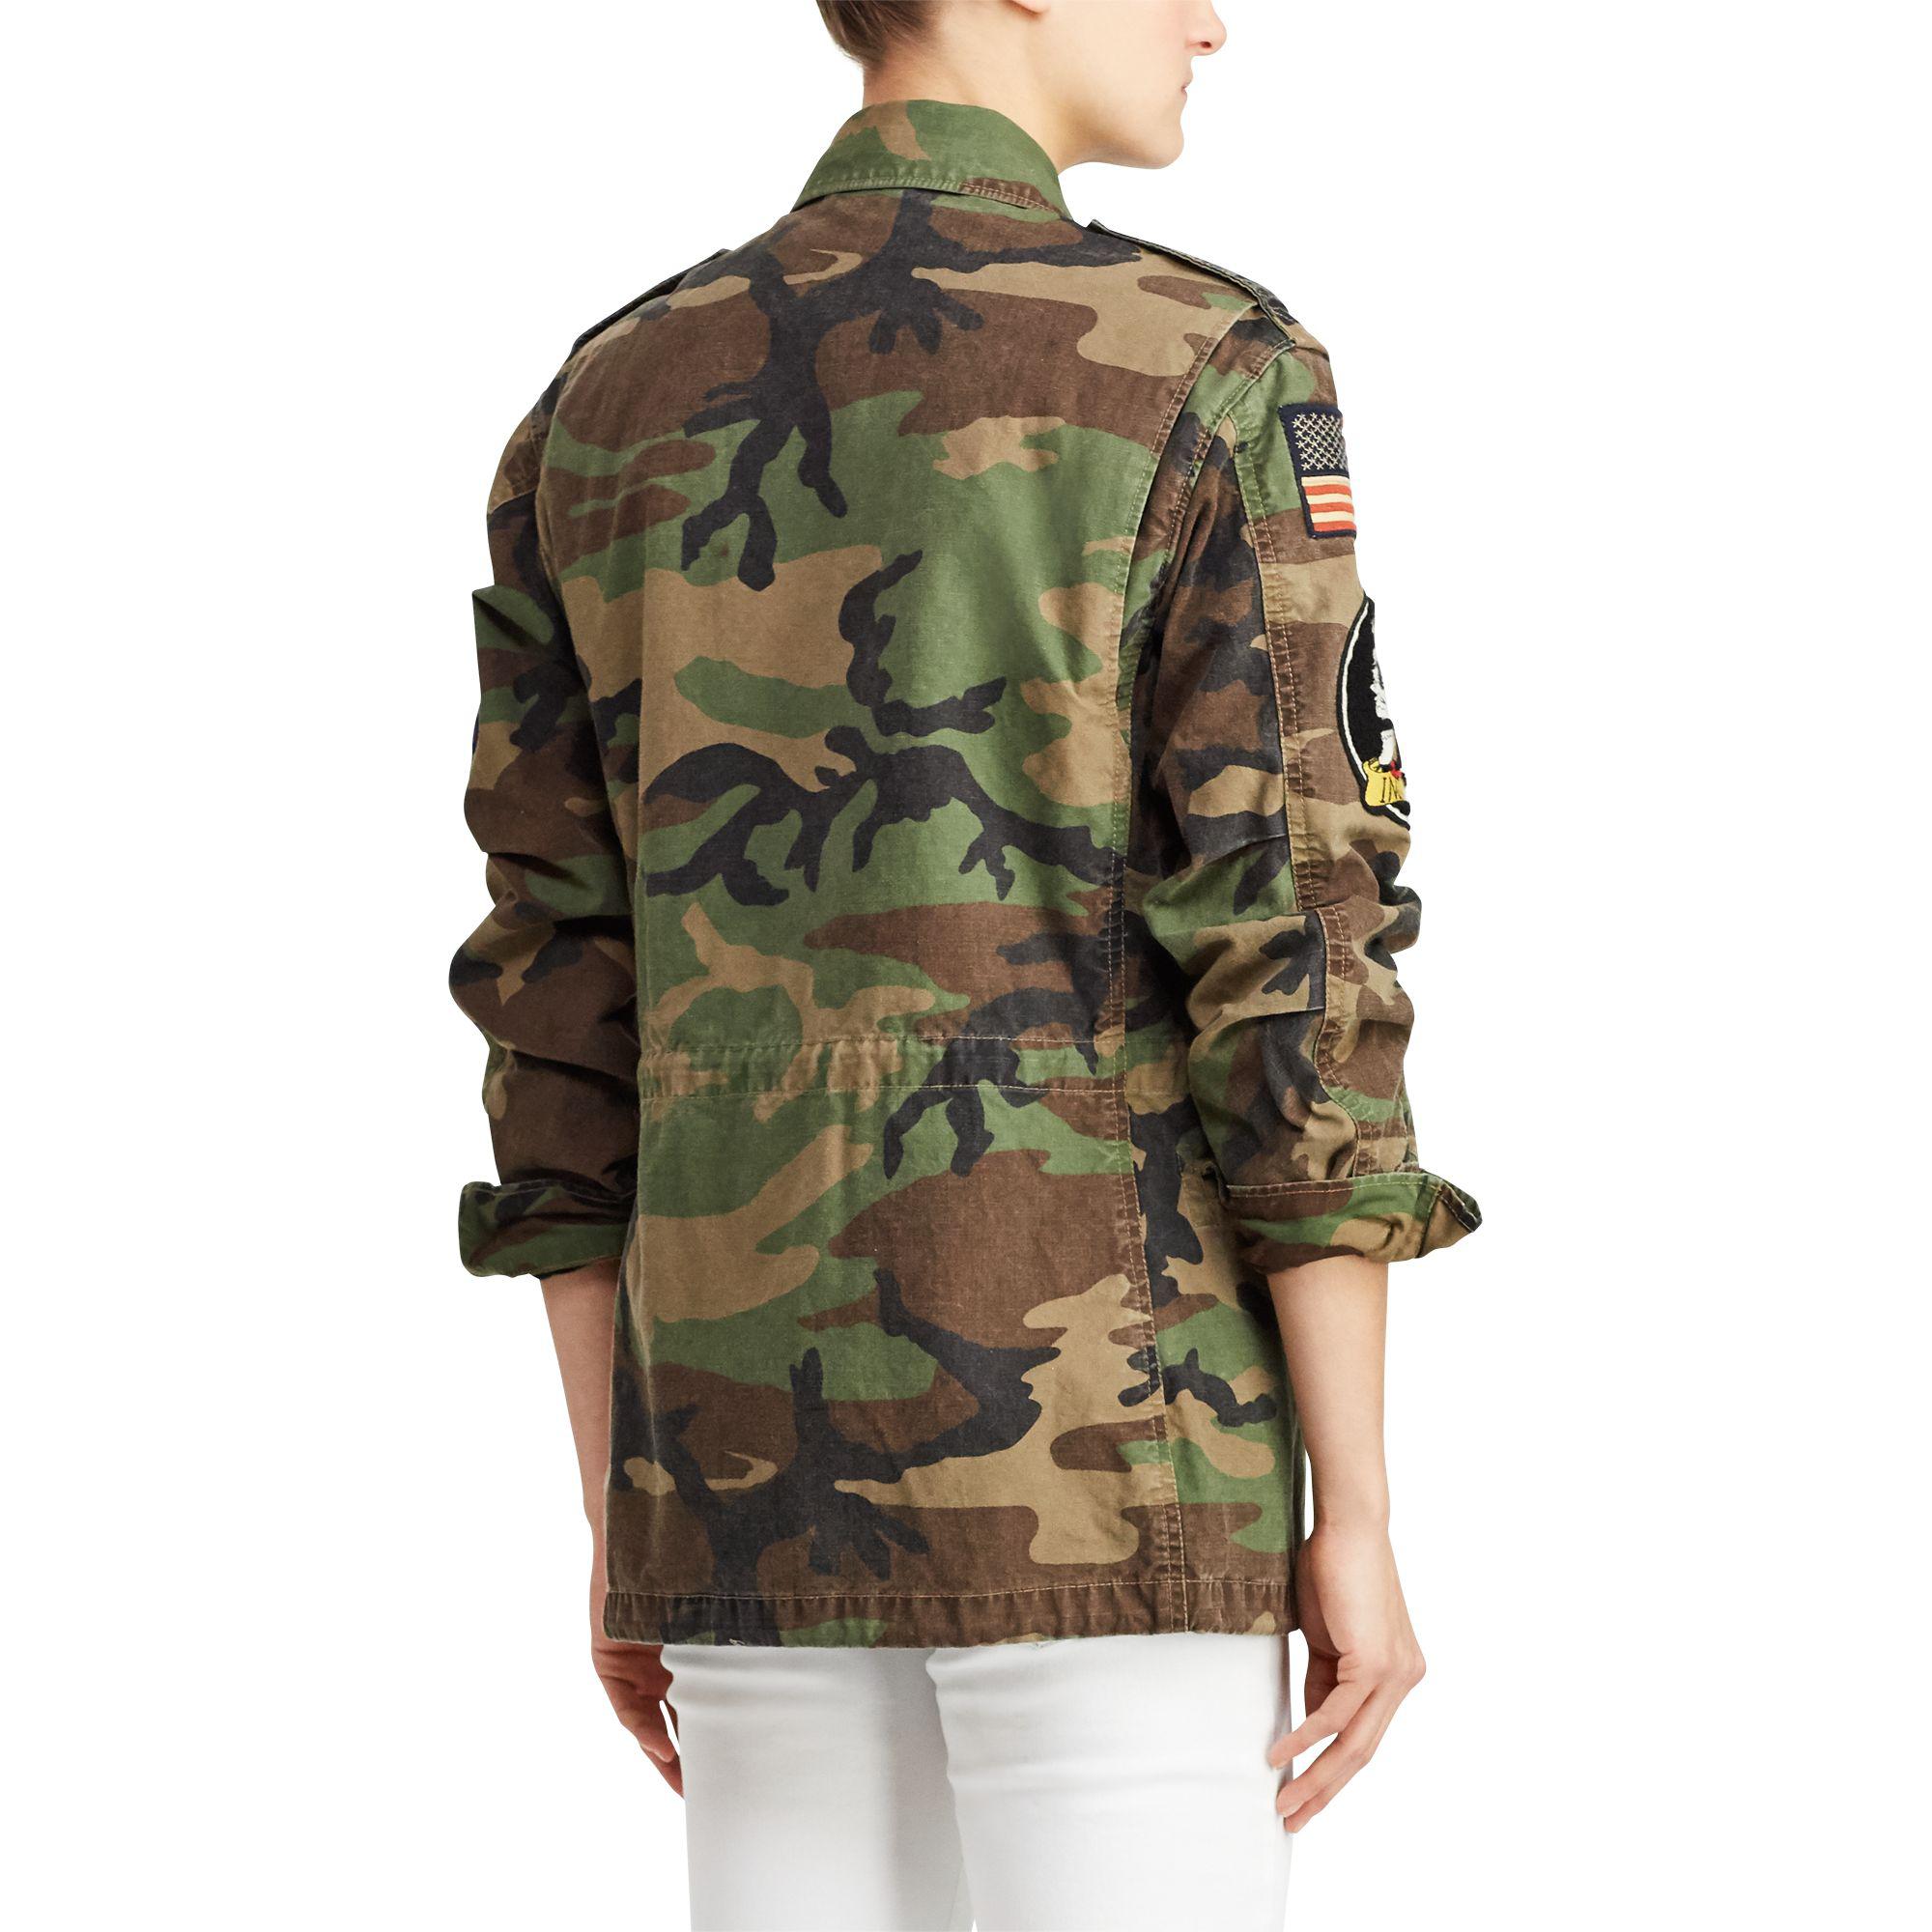 Polo Ralph Lauren Cotton Camo Military Combat Jacket in Green - Lyst